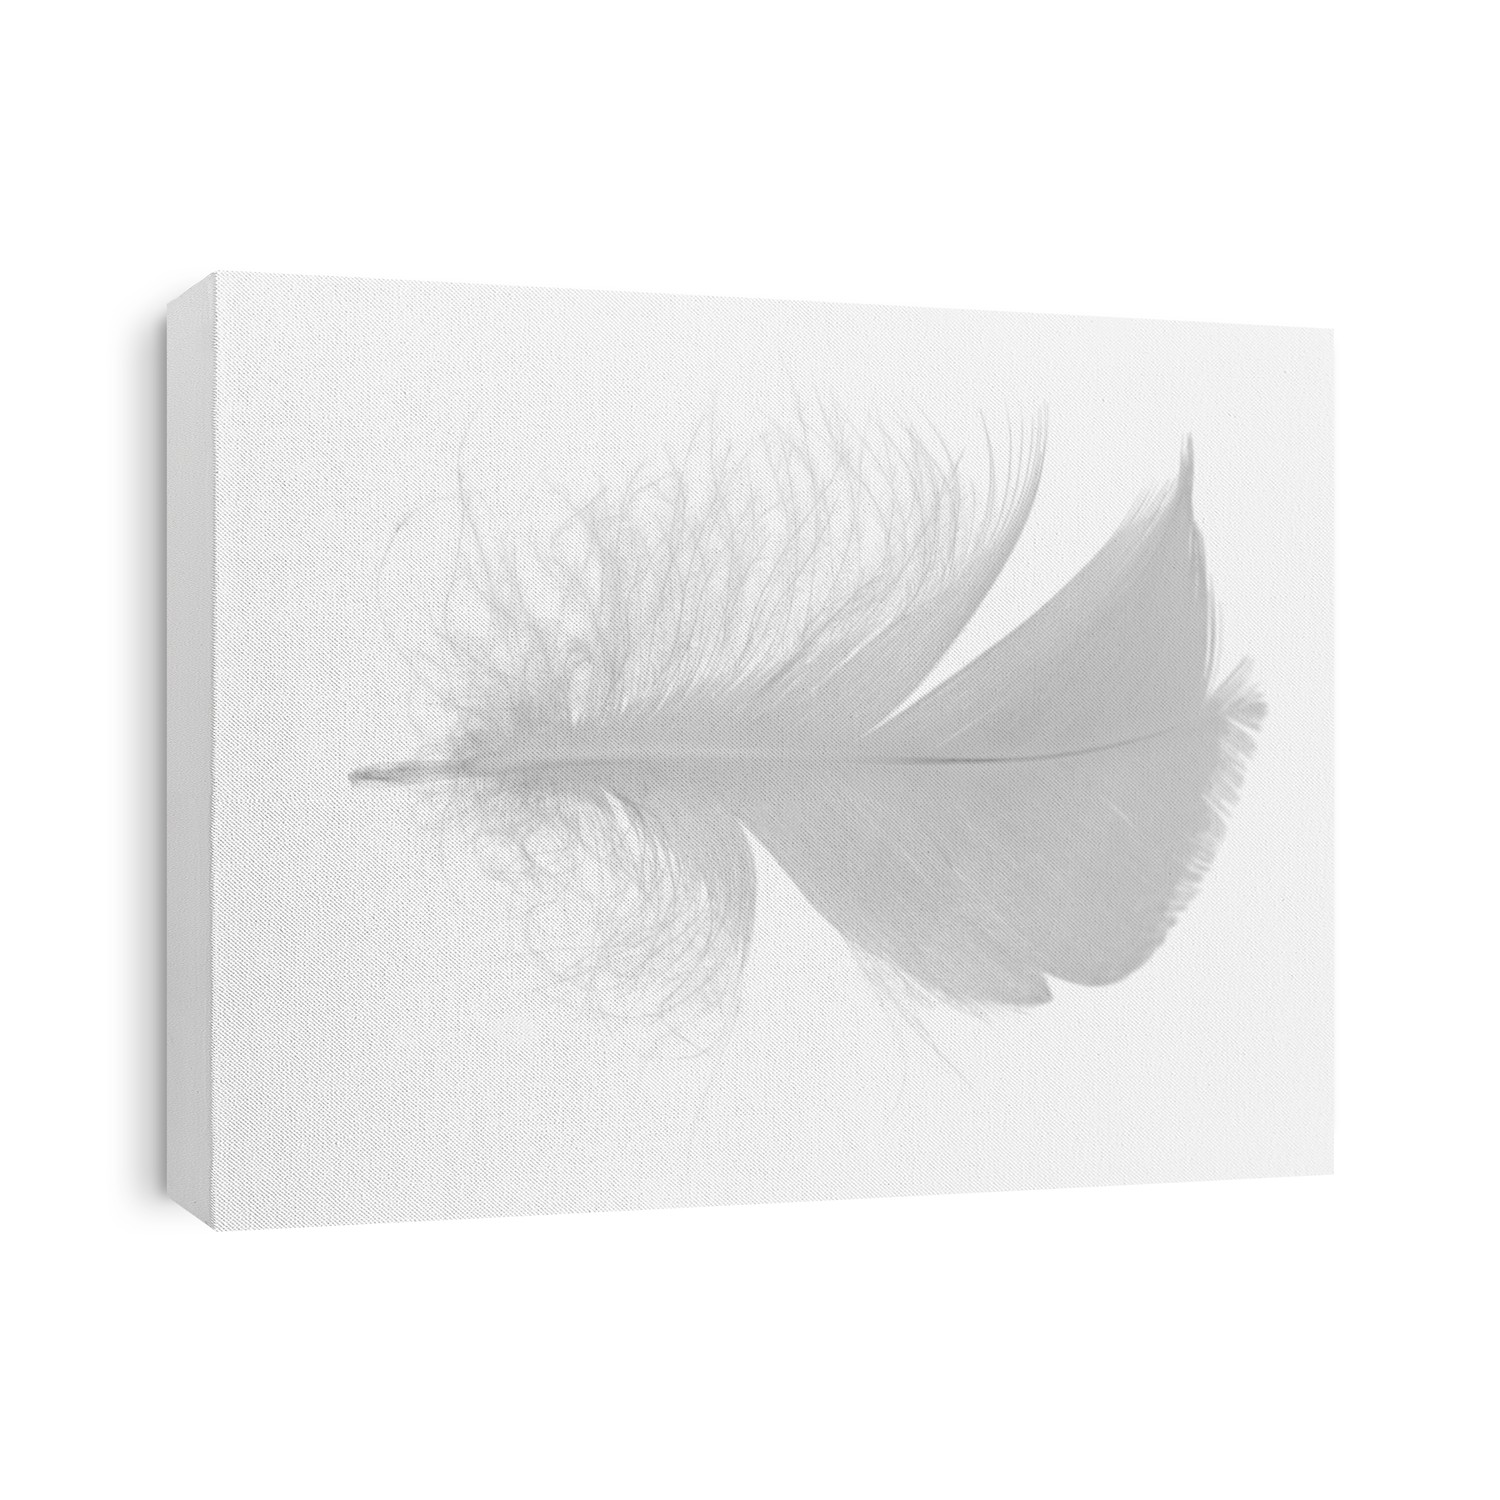 single grey feather isolated on white background